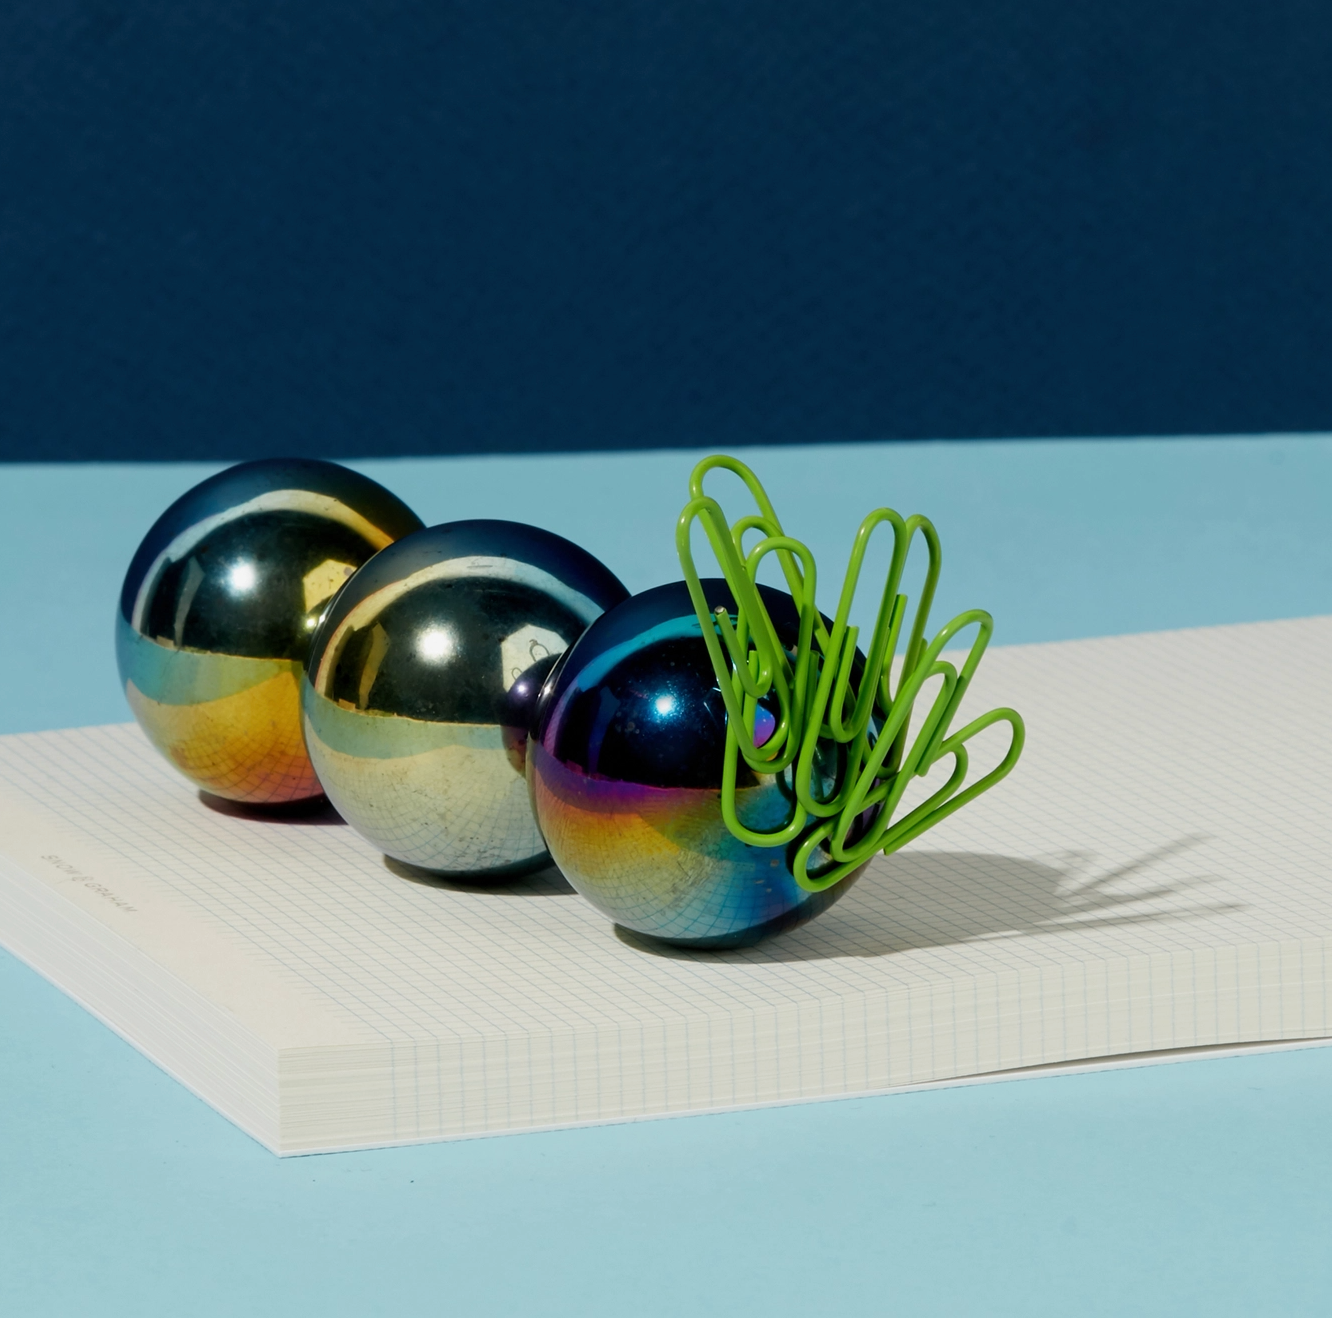 Buy MENGDUO Set of 1000 5mm Magnetic Balls Fun Stress Desk Toy for Adults  ,Building Blocks Fidget Gadget Toys for Stress (10 Colors) Online at  desertcartIreland